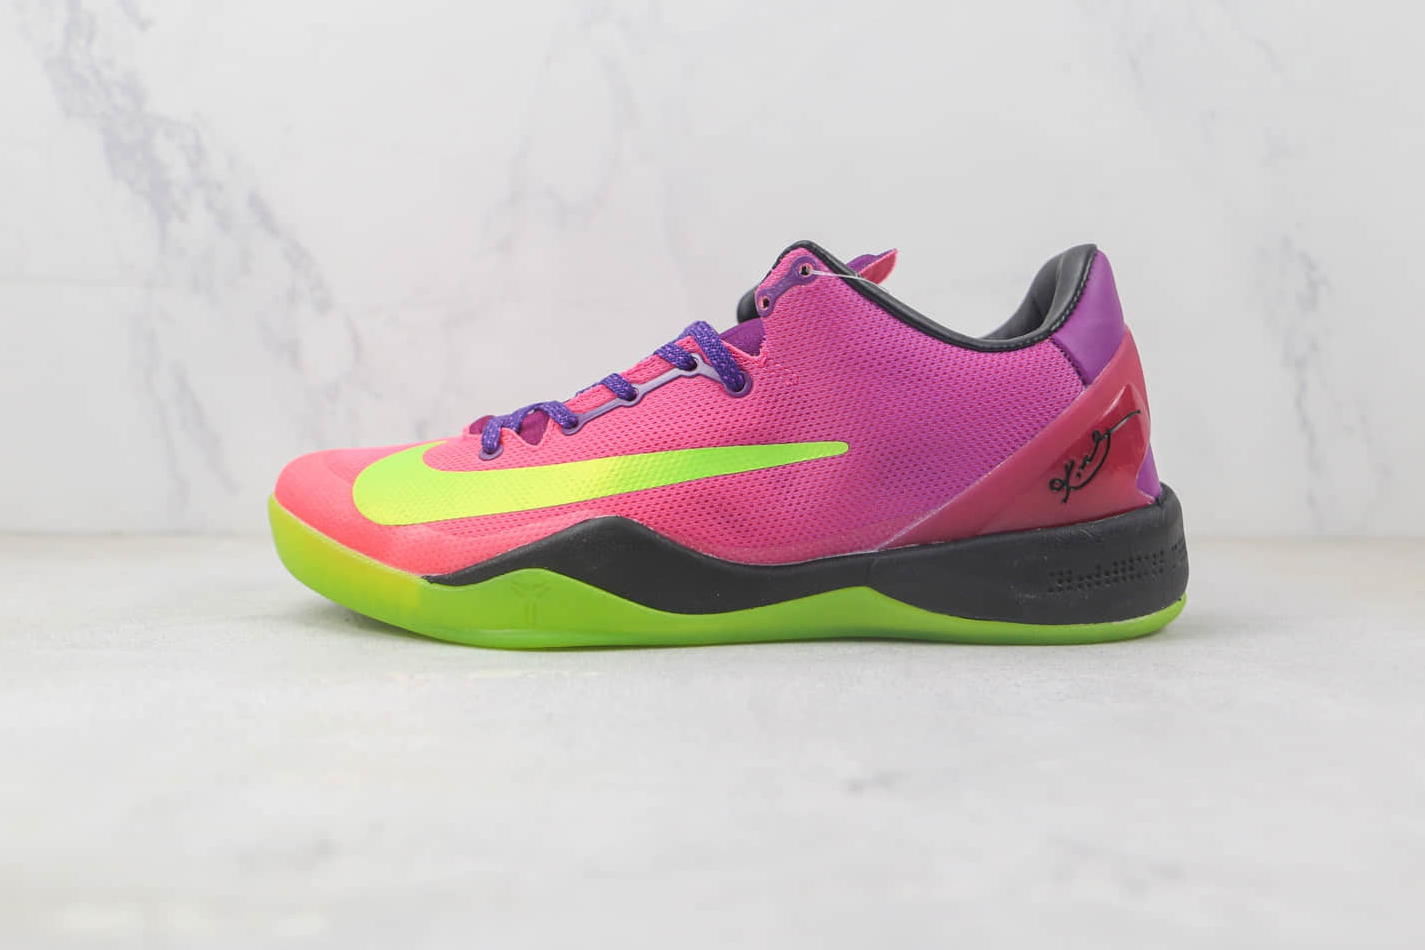 Nike Kobe 8 System 'Mambacurial' 615315-500 - Lightweight and Stylish Basketball Shoes